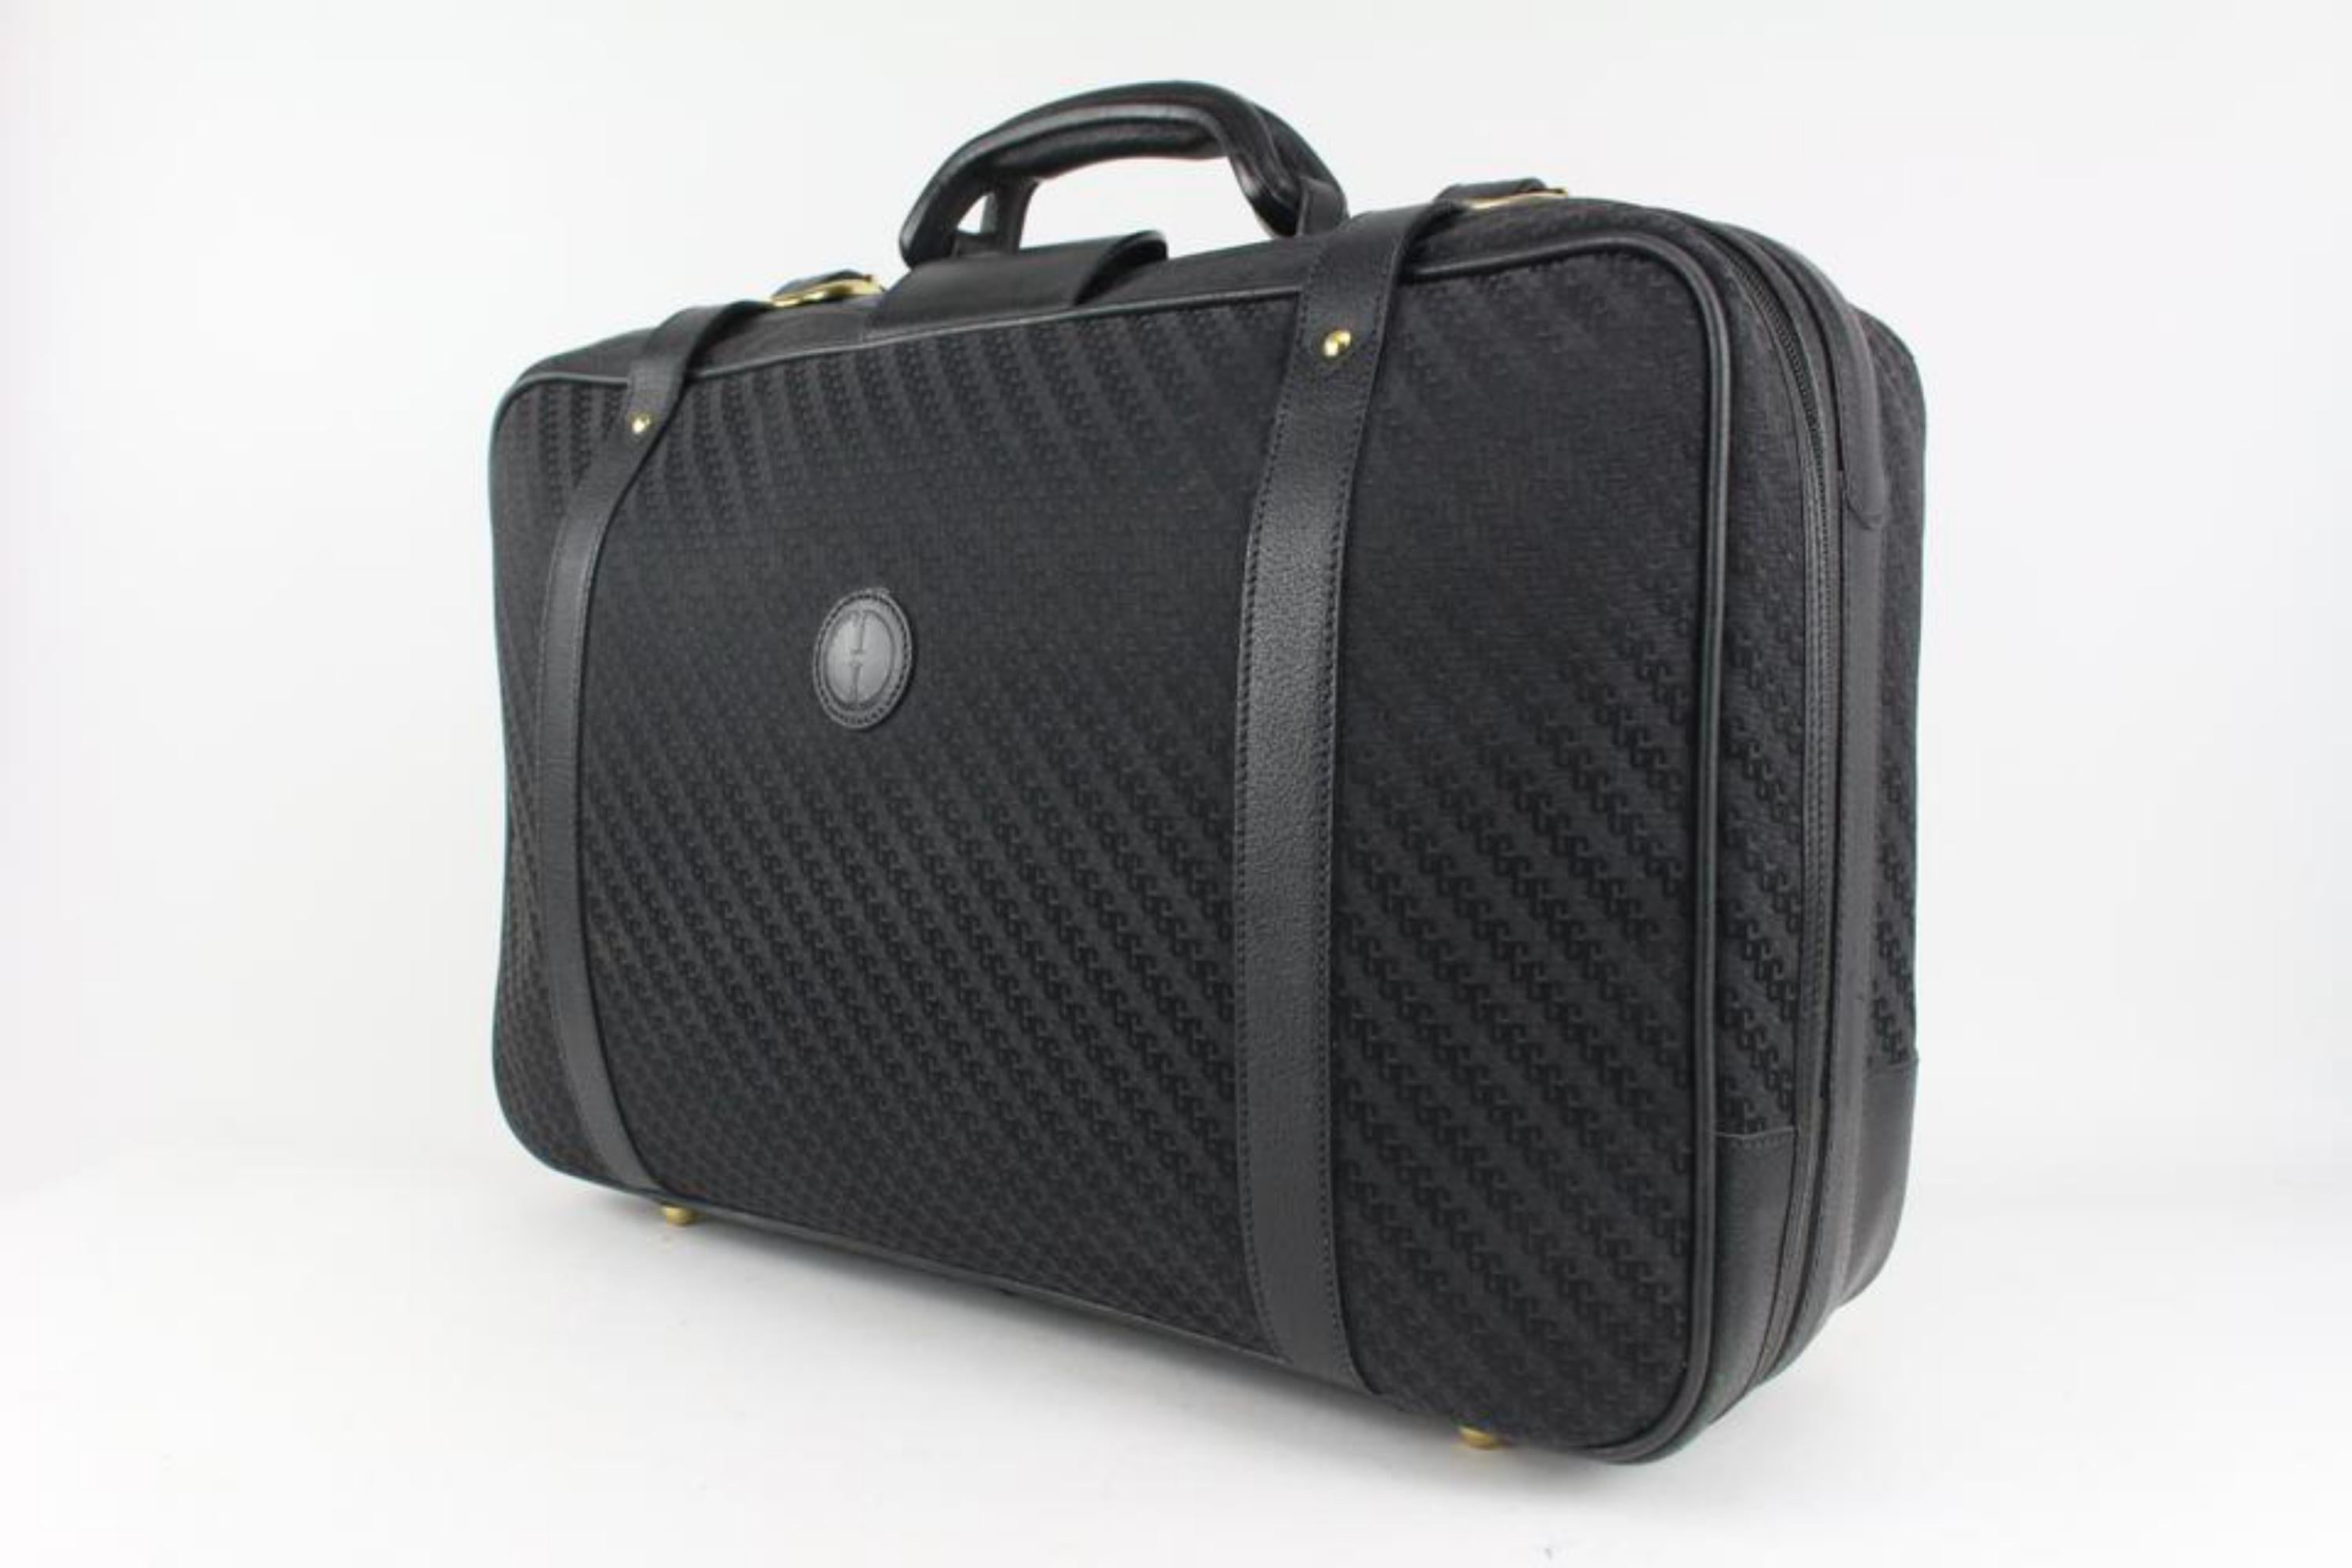 Gucci Large Black Monogram GG Suitcase Luggage 1026g47 4